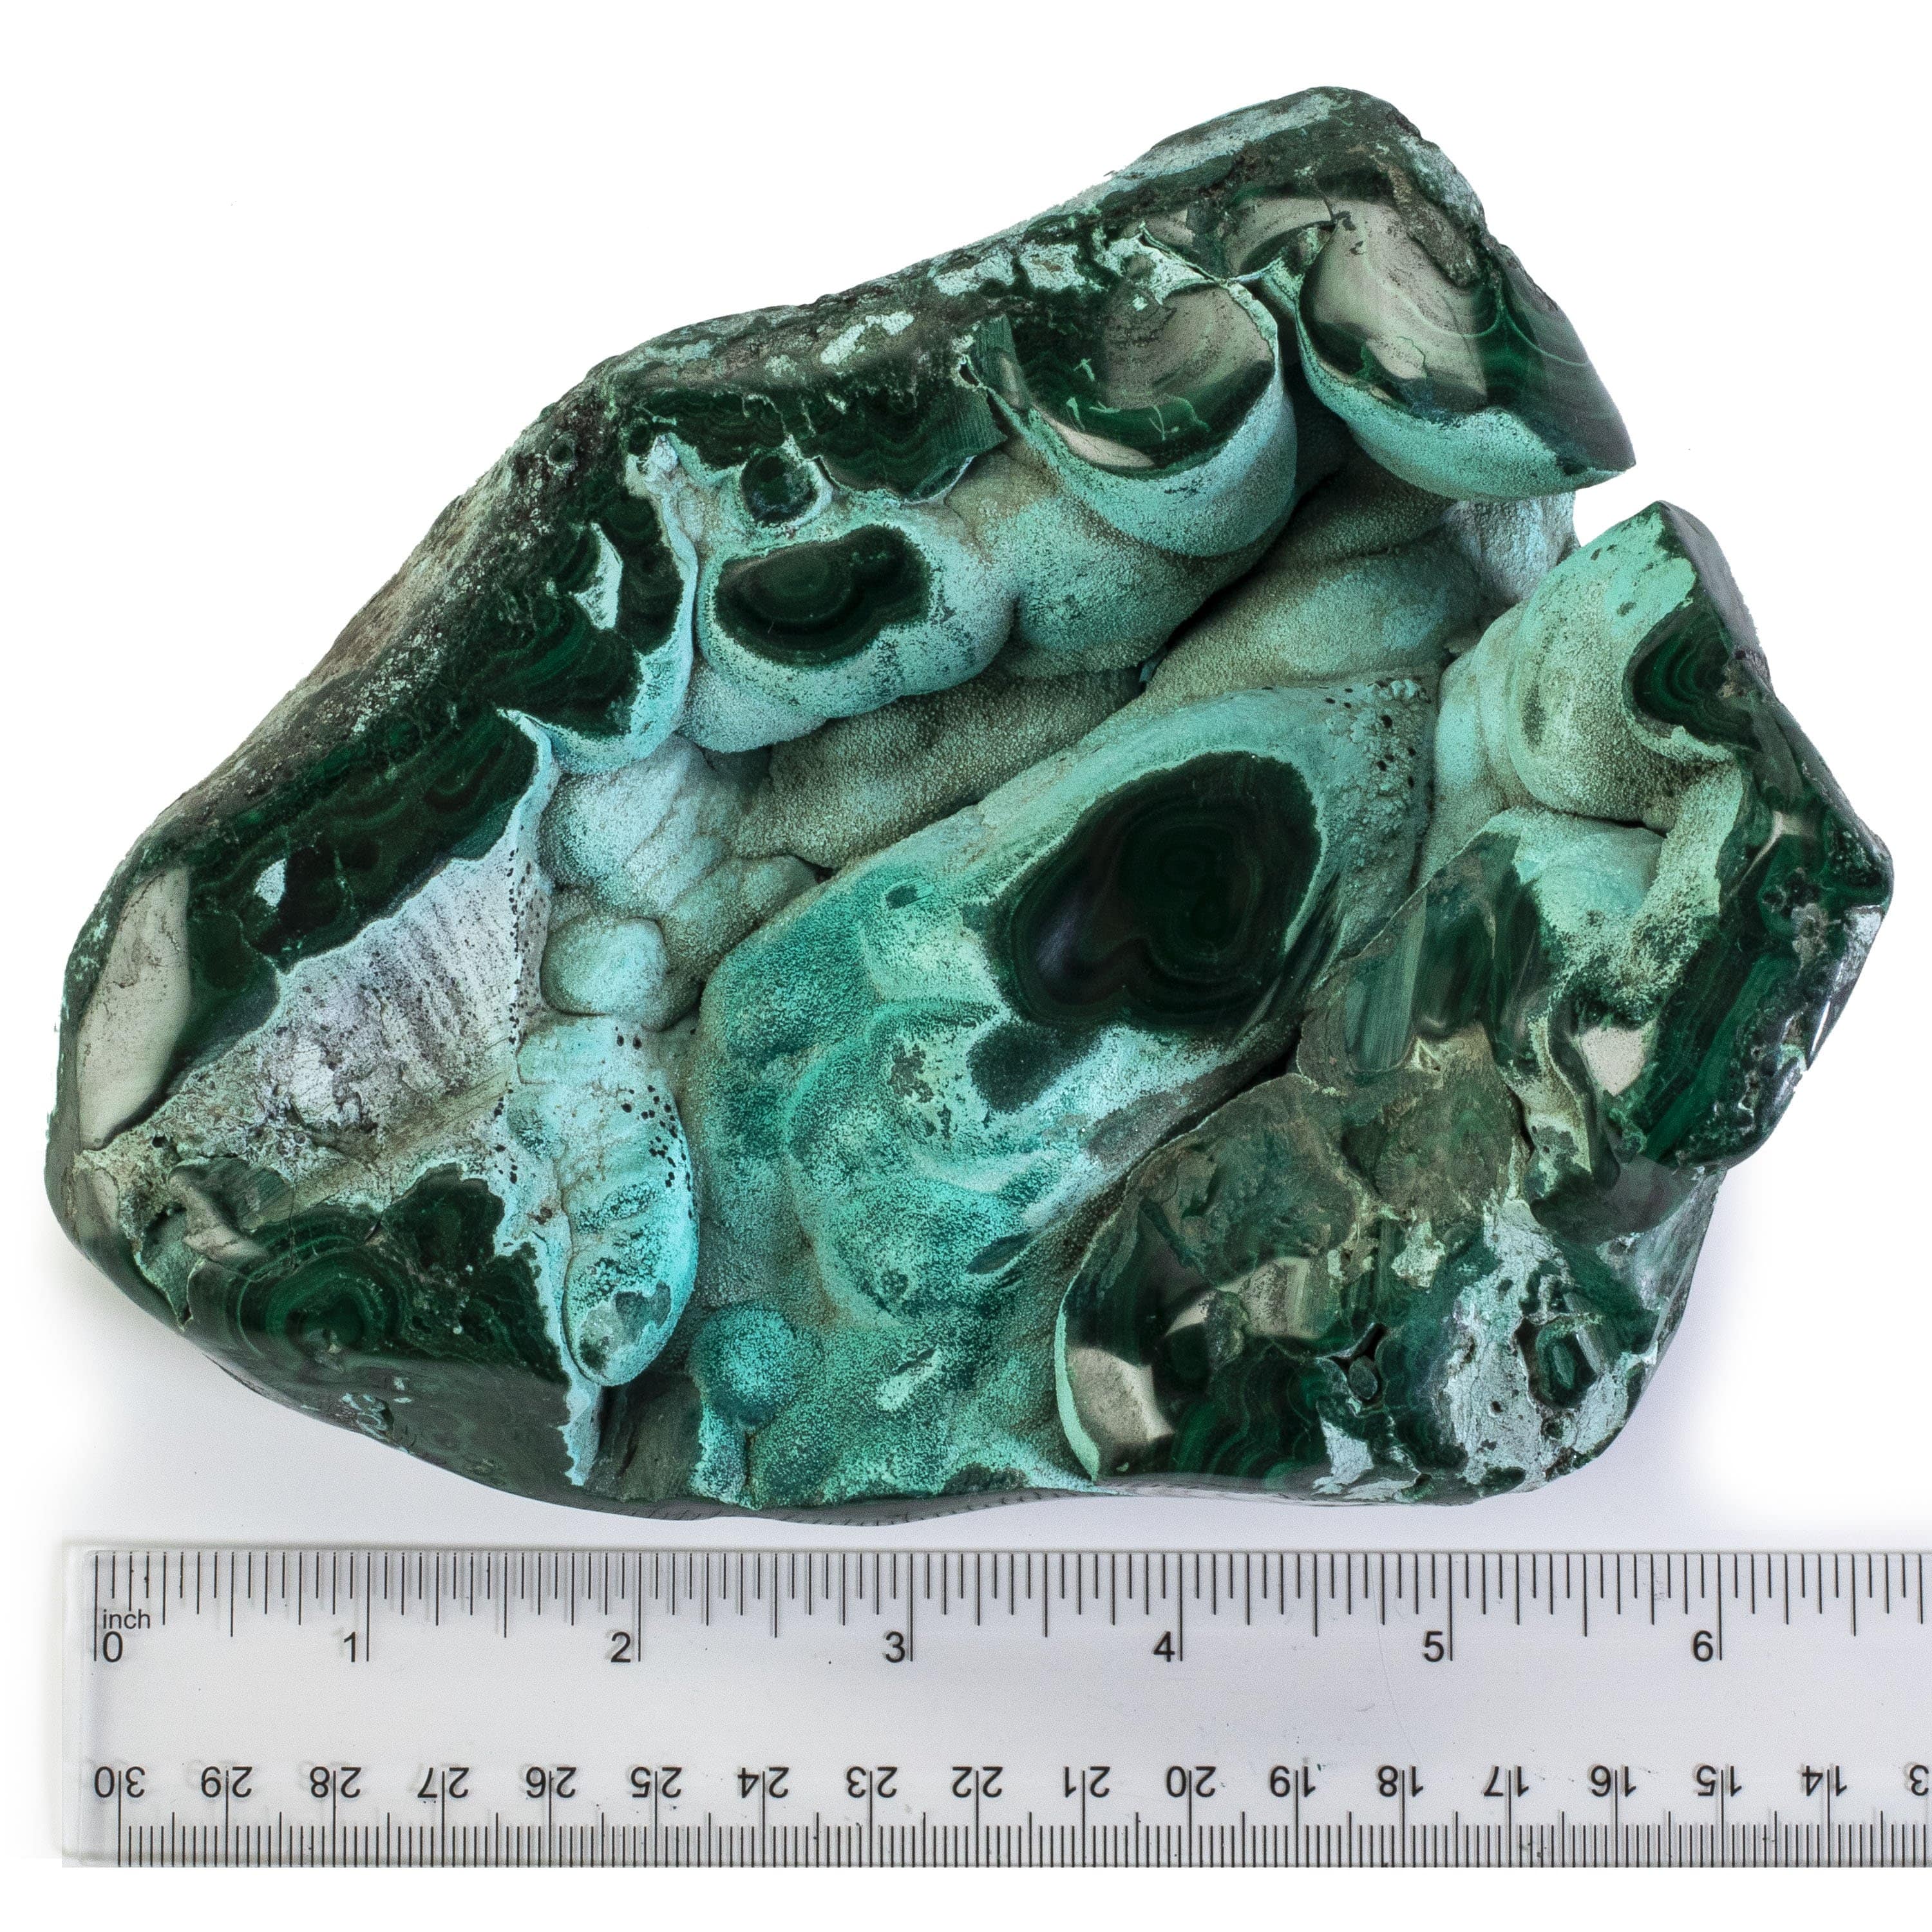 Kalifano Malachite Rare Natural Green Malachite with Blue Chrysocolla Freeform Specimen from Congo - 1.3 kg / 2.9 lbs MAC850.005